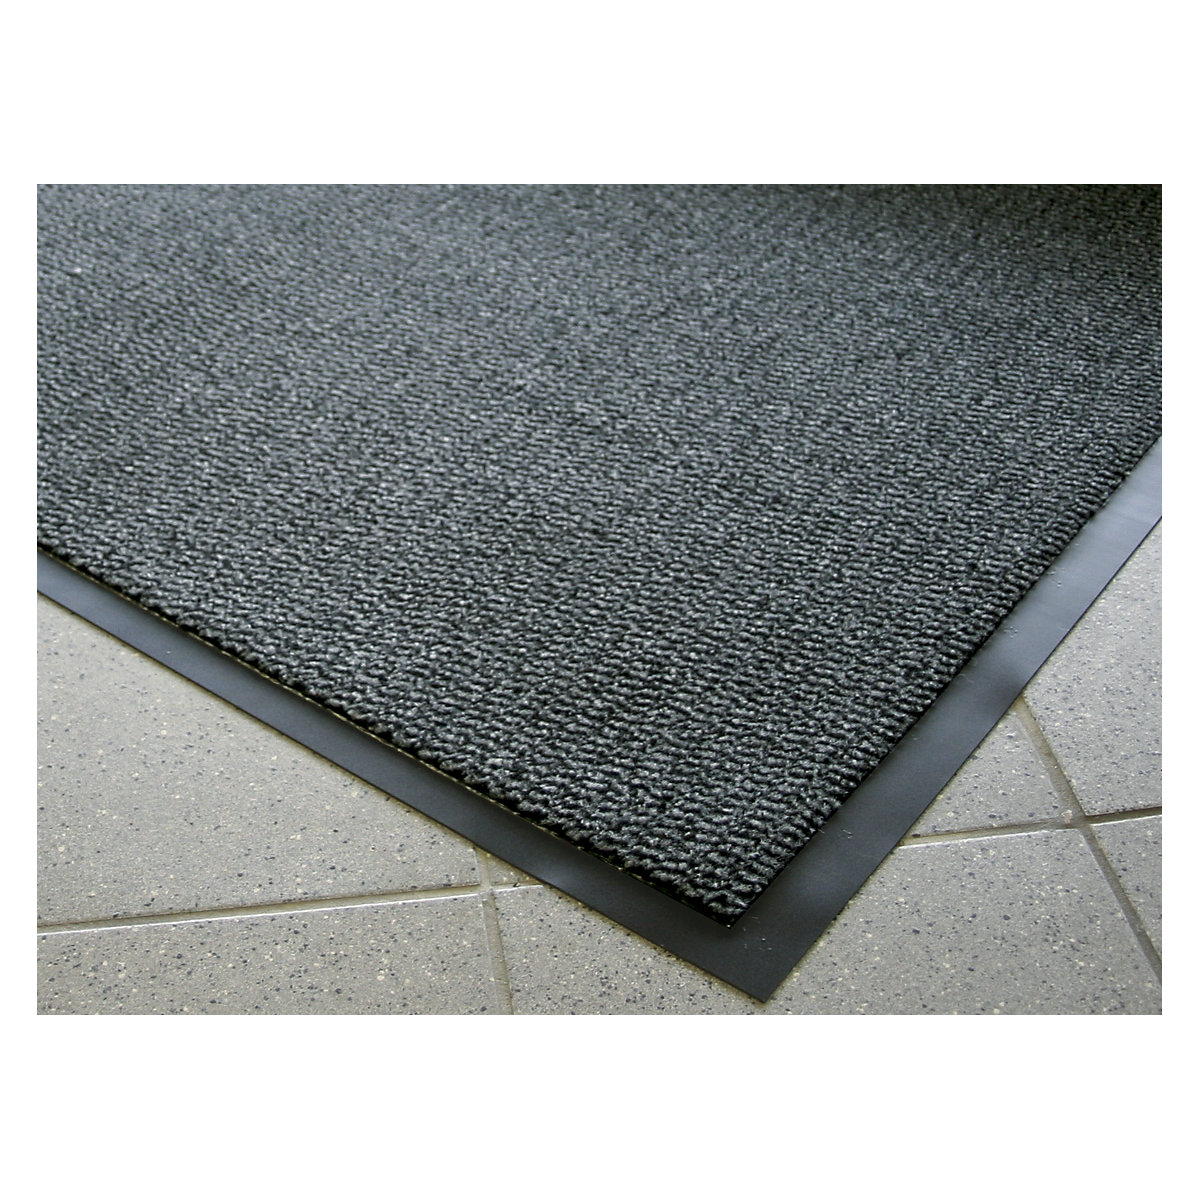 Entrance matting for indoor use, polypropylene pile, LxW 1500 x 900 mm, black / metallic